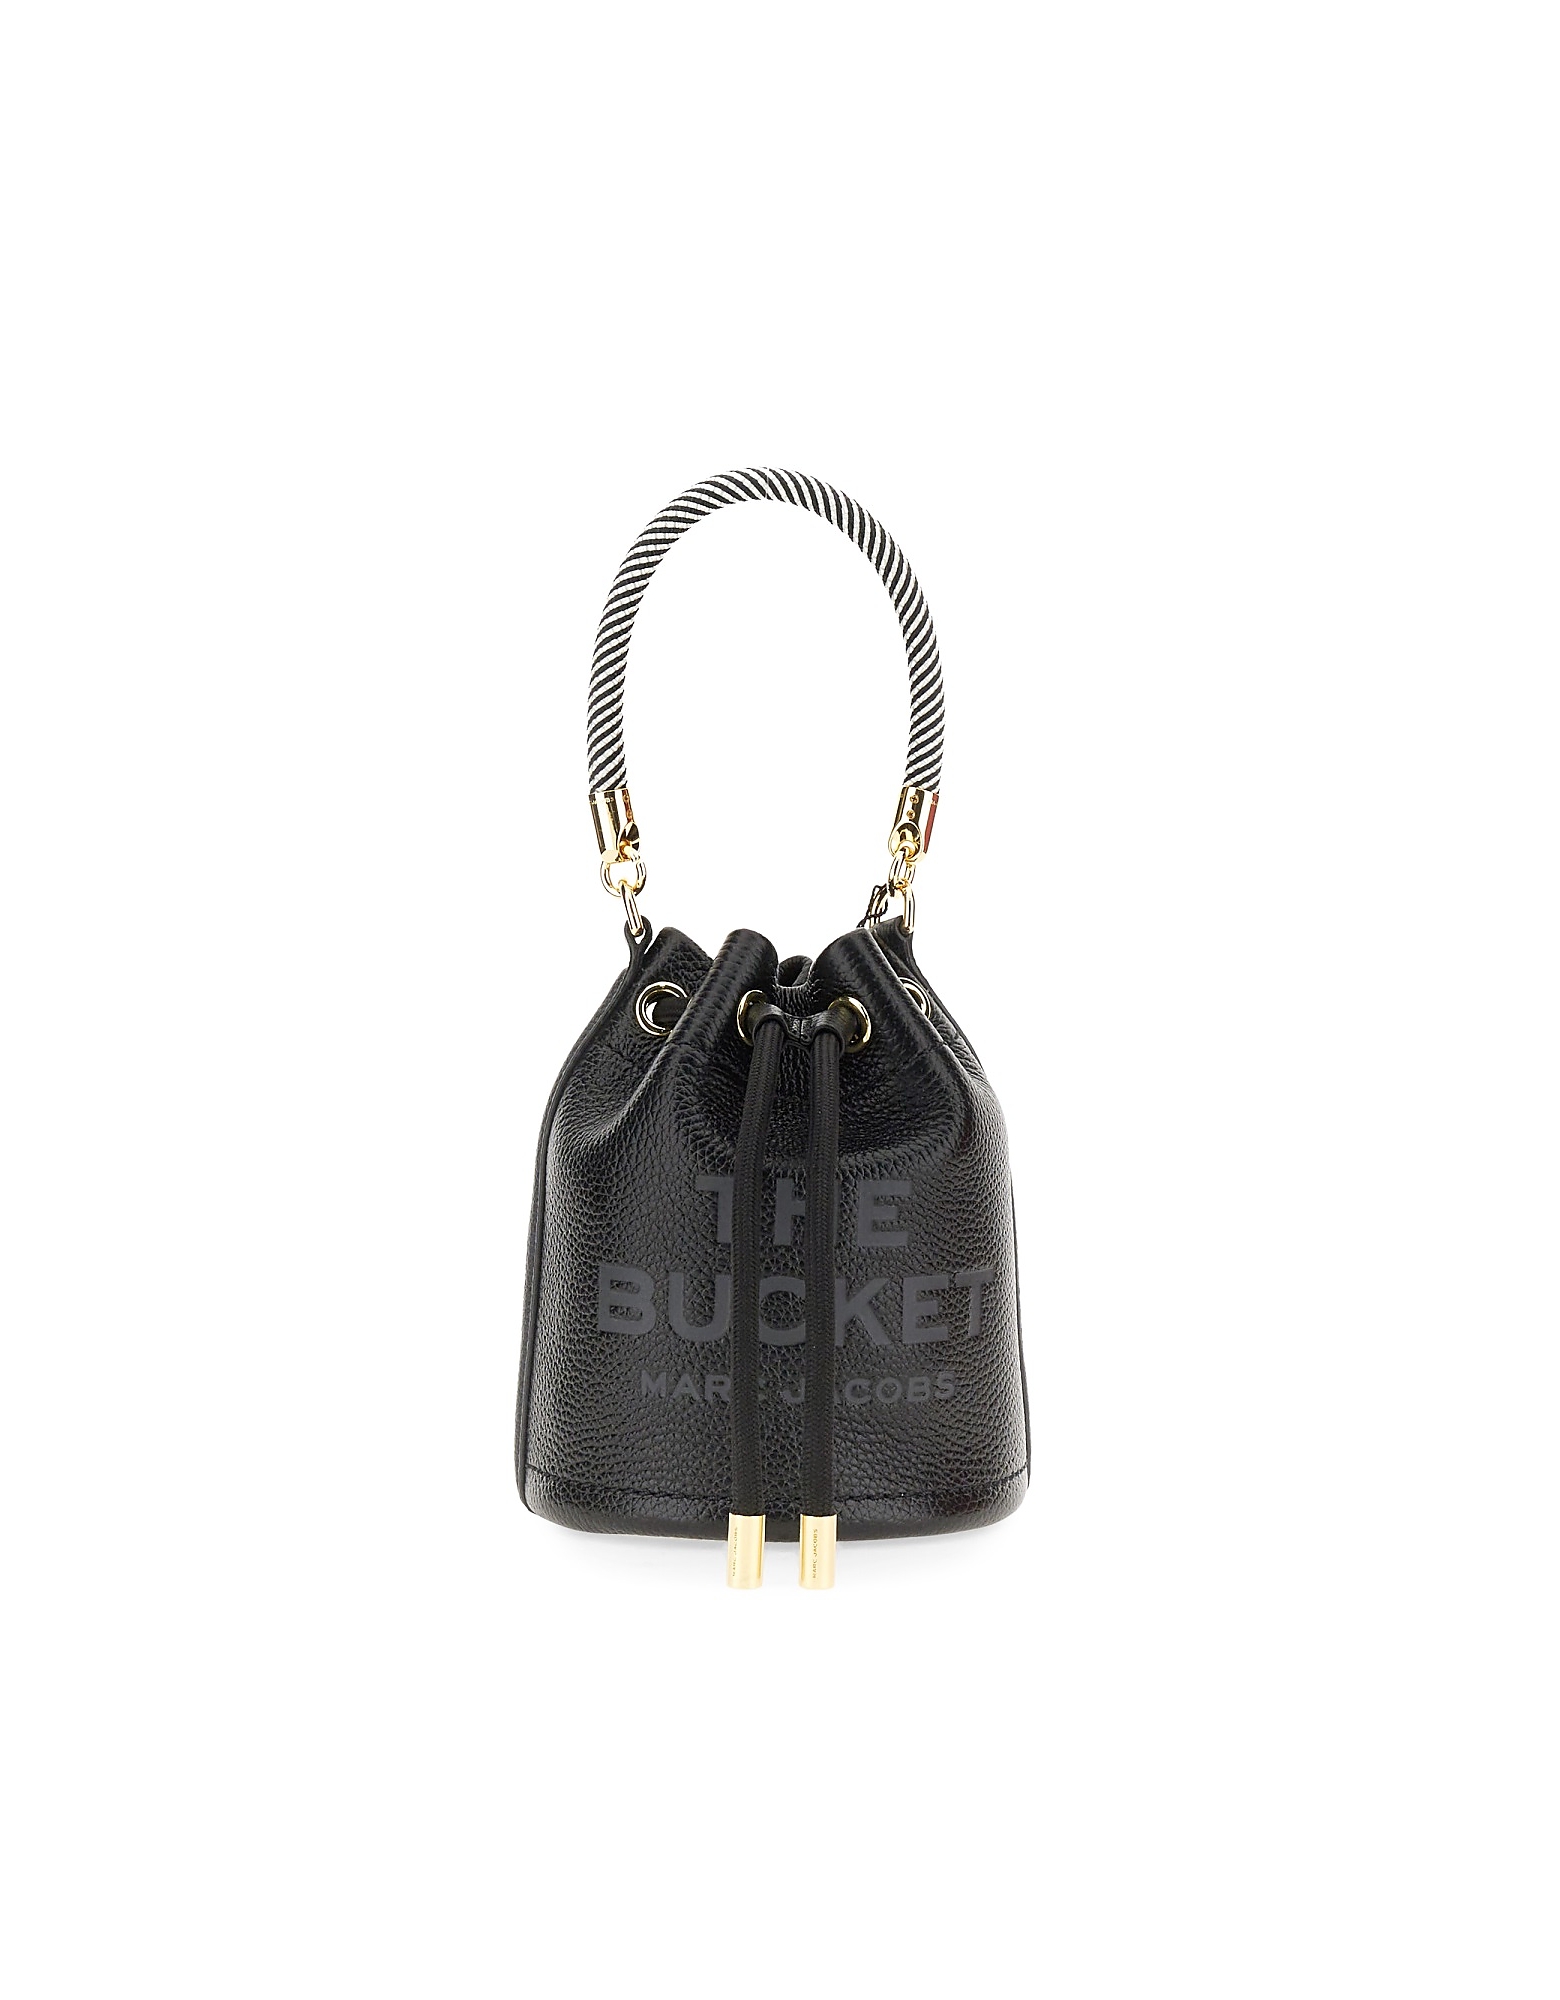 Marc Jacobs Designer Handbags "the Bucket" Mini Bag In Black